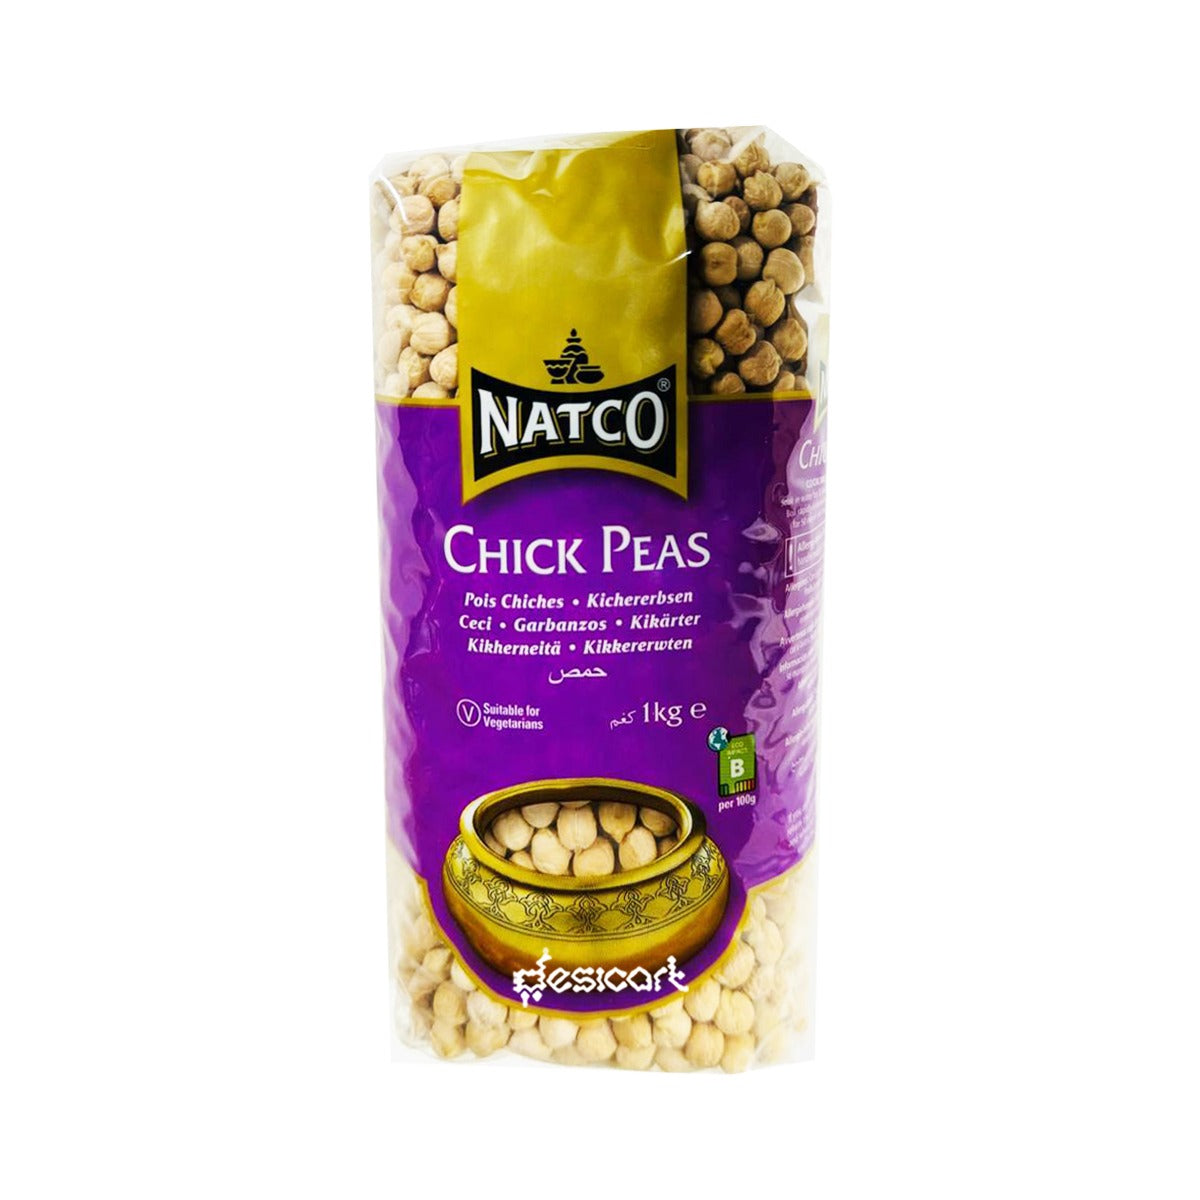 NATCO CHICK PEAS 1KG